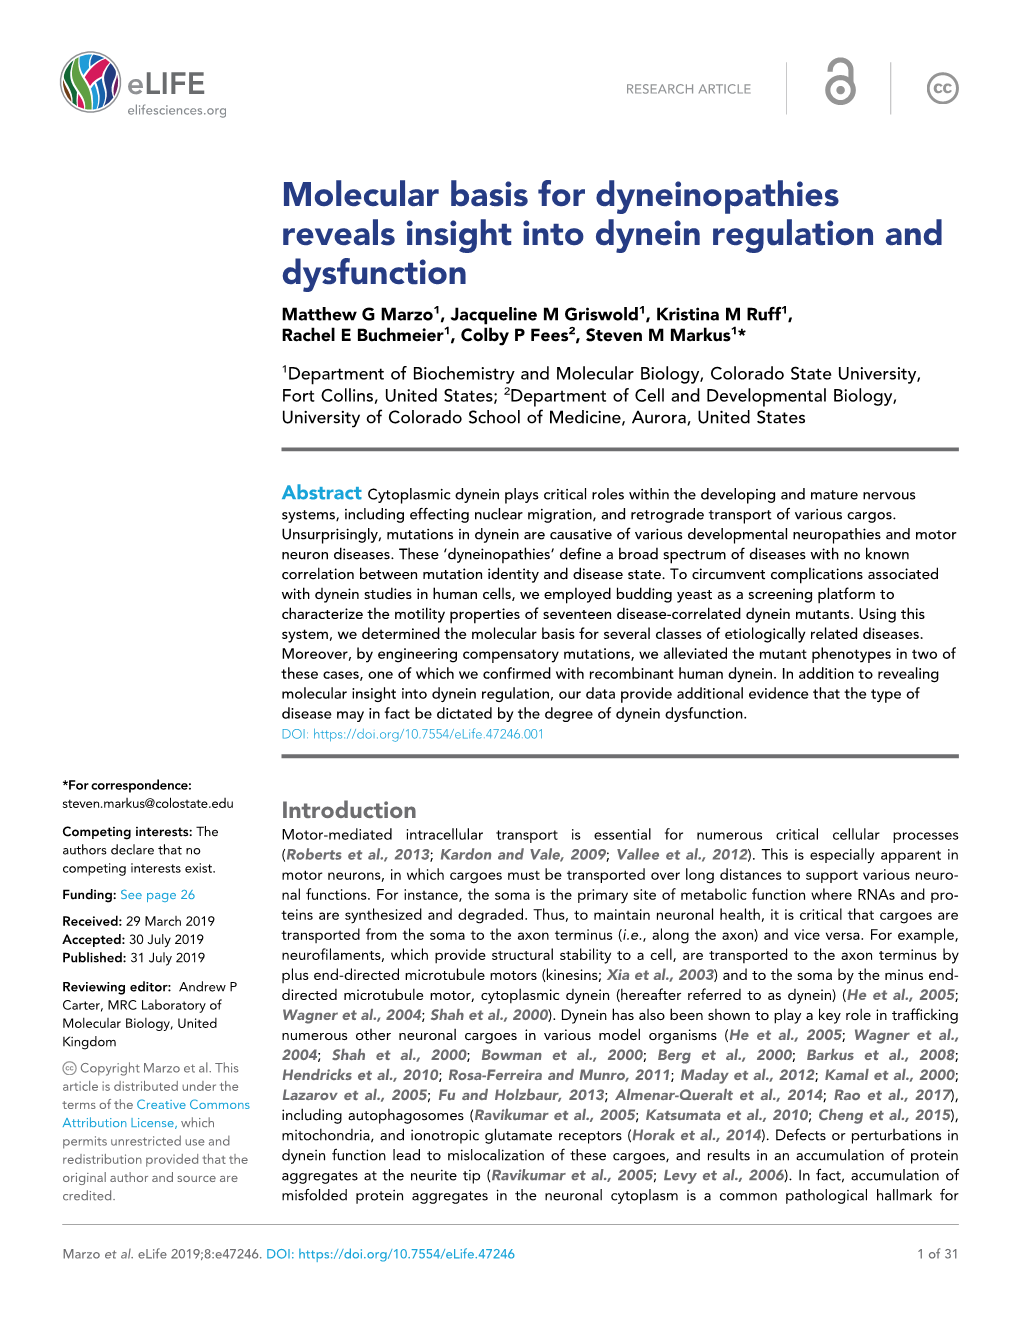 Molecular Basis for Dyneinopathies Reveals Insight Into Dynein